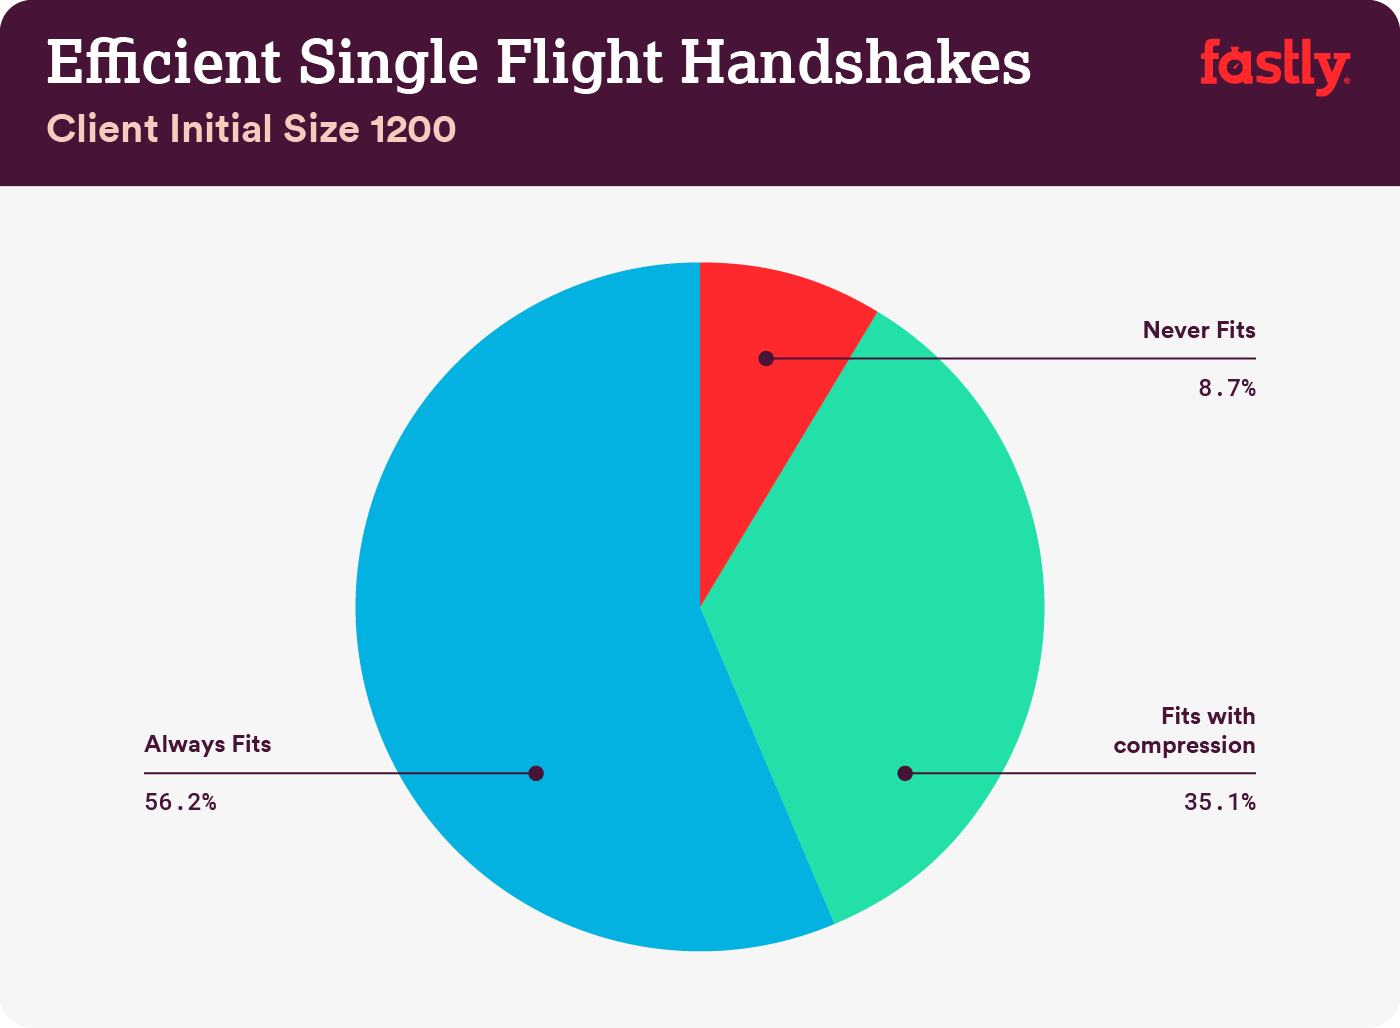 Efficient single flight handshakes